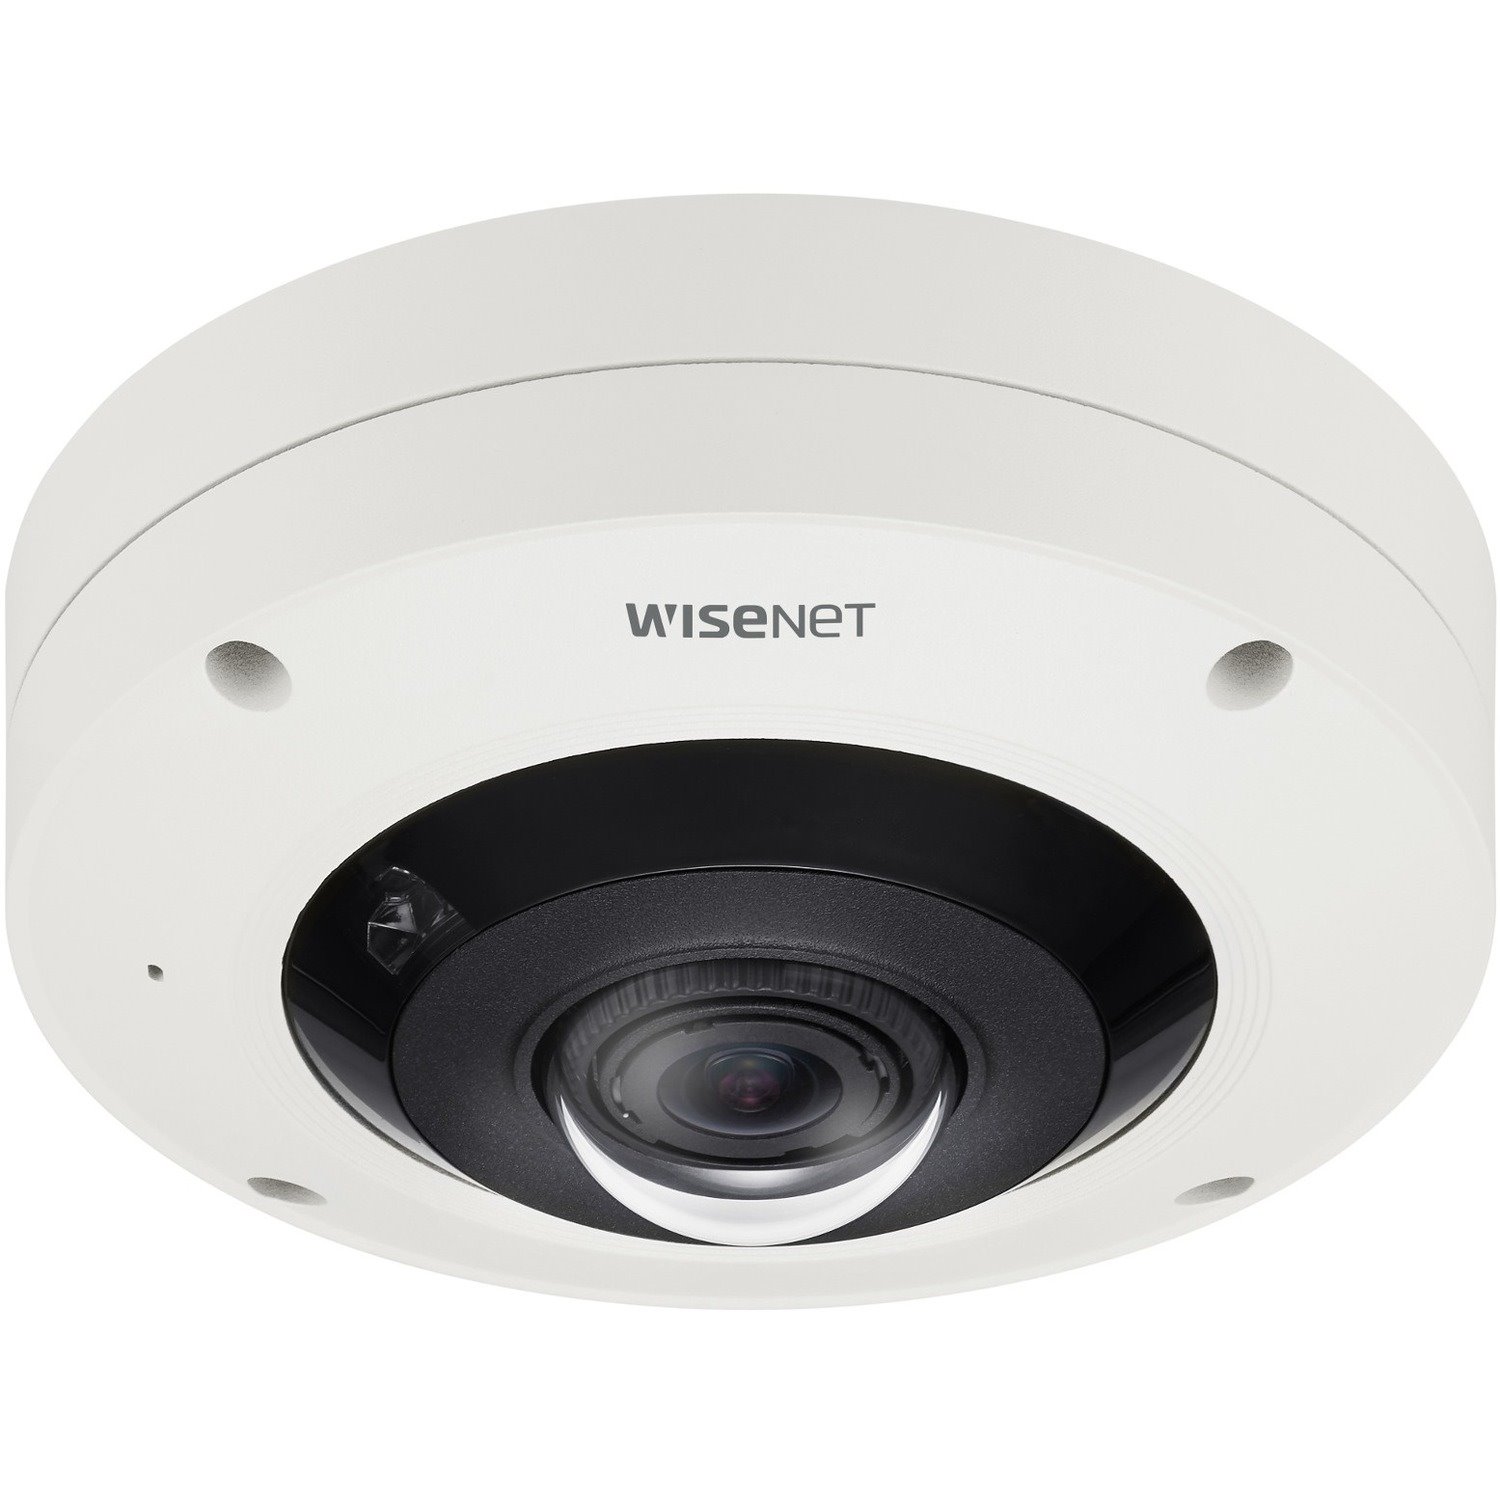 Wisenet XNF-9010RV 12 Megapixel Outdoor HD Network Camera - Colour - Fisheye - White